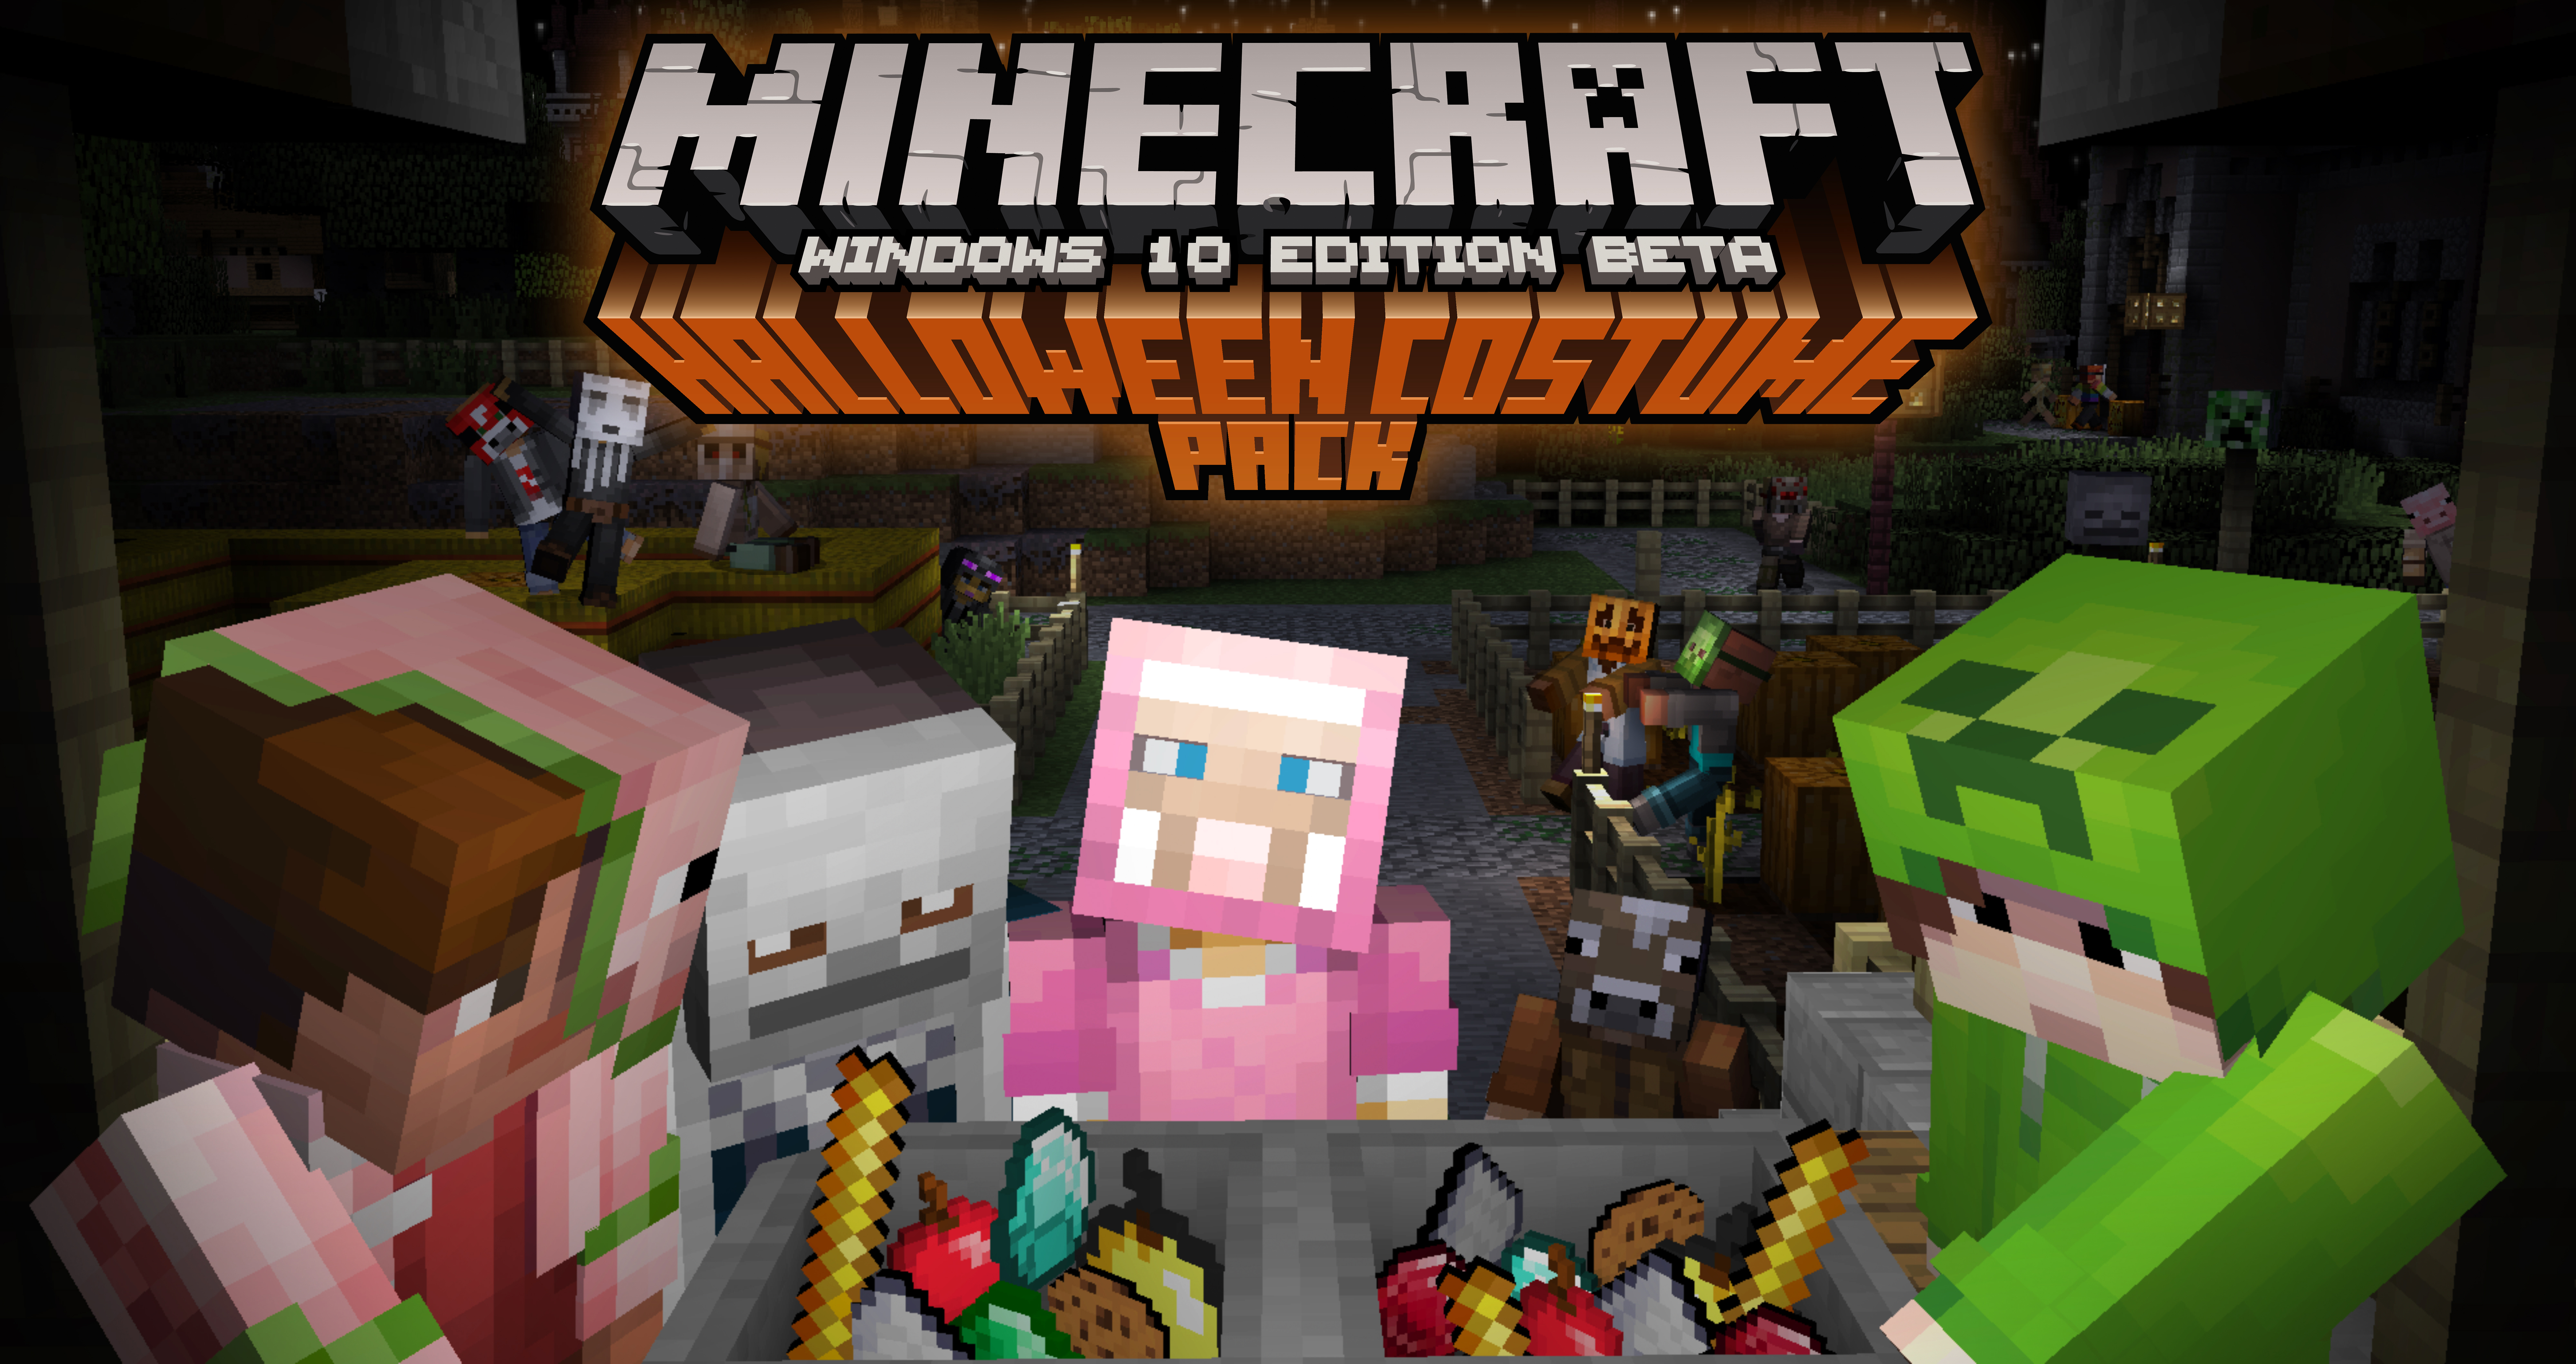 Halloween Has Arrived on Minecraft: Pocket Edition and Windows 10 Edition Beta